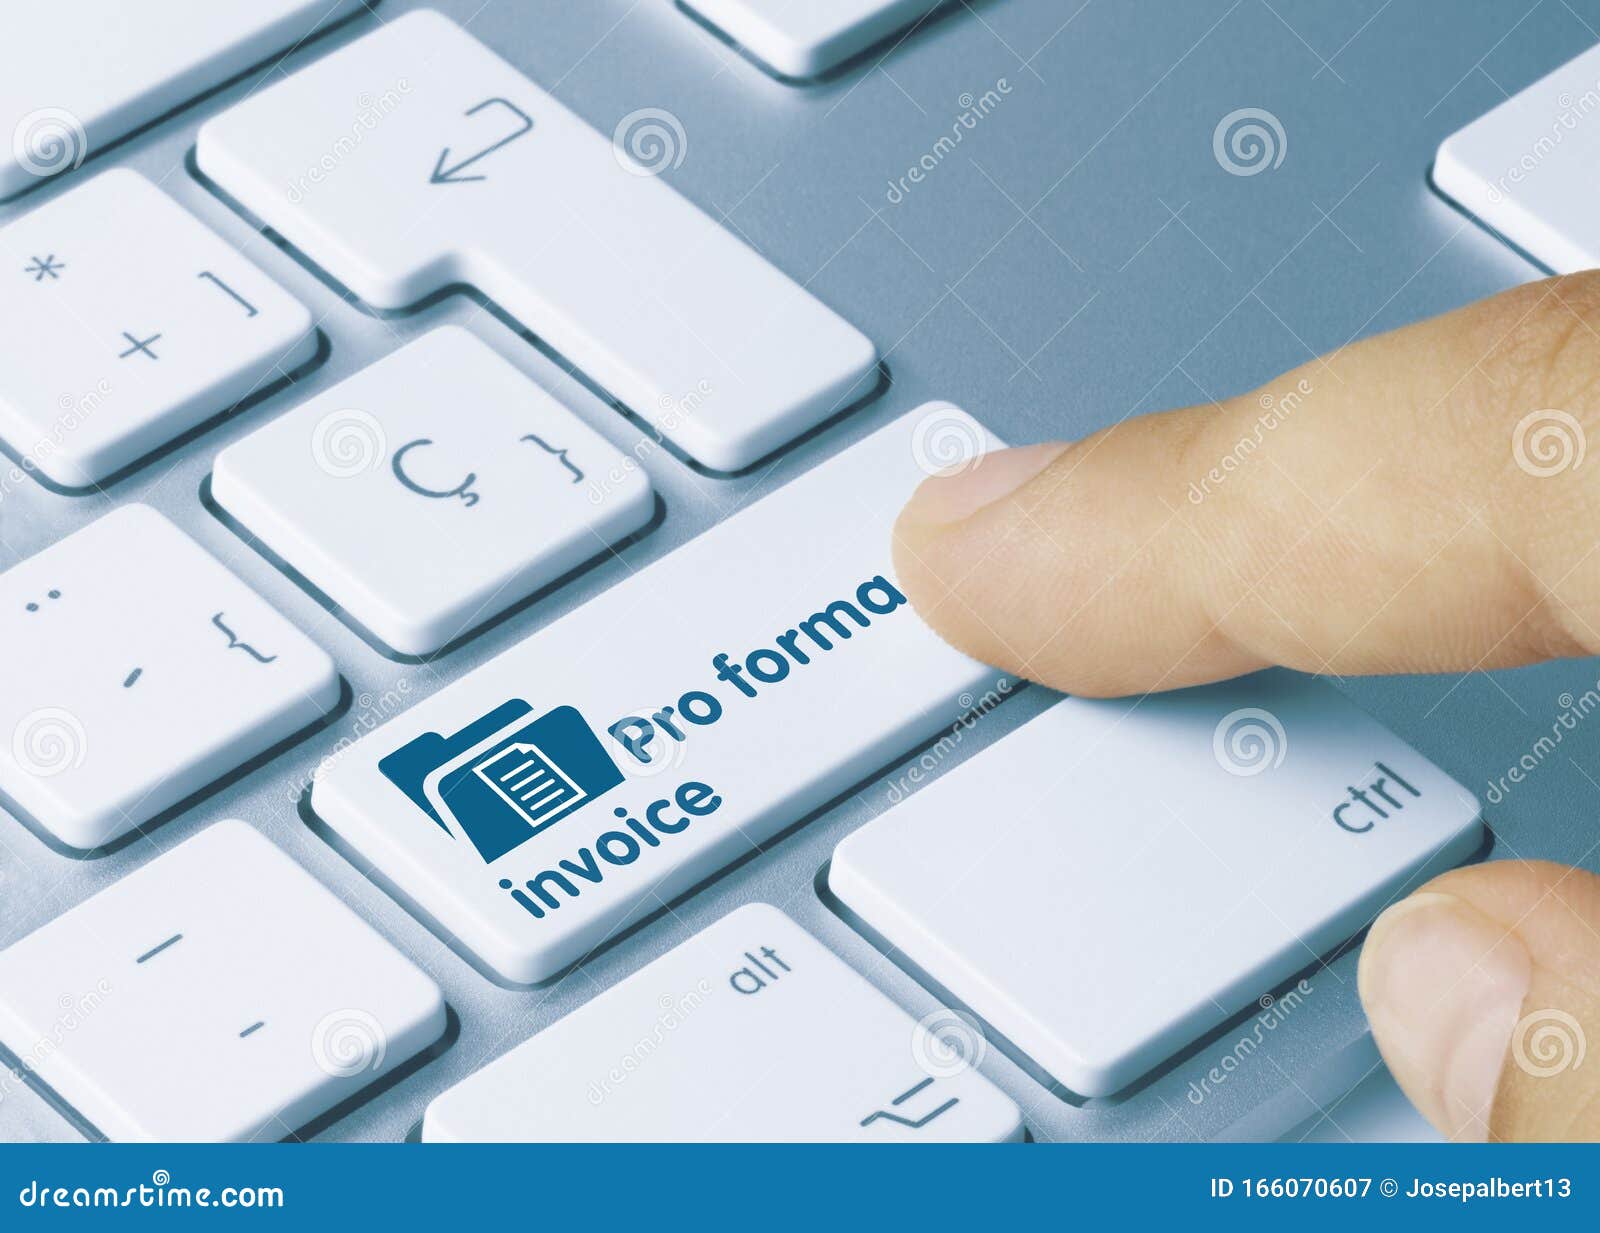 pro forma invoice - inscription on blue keyboard key